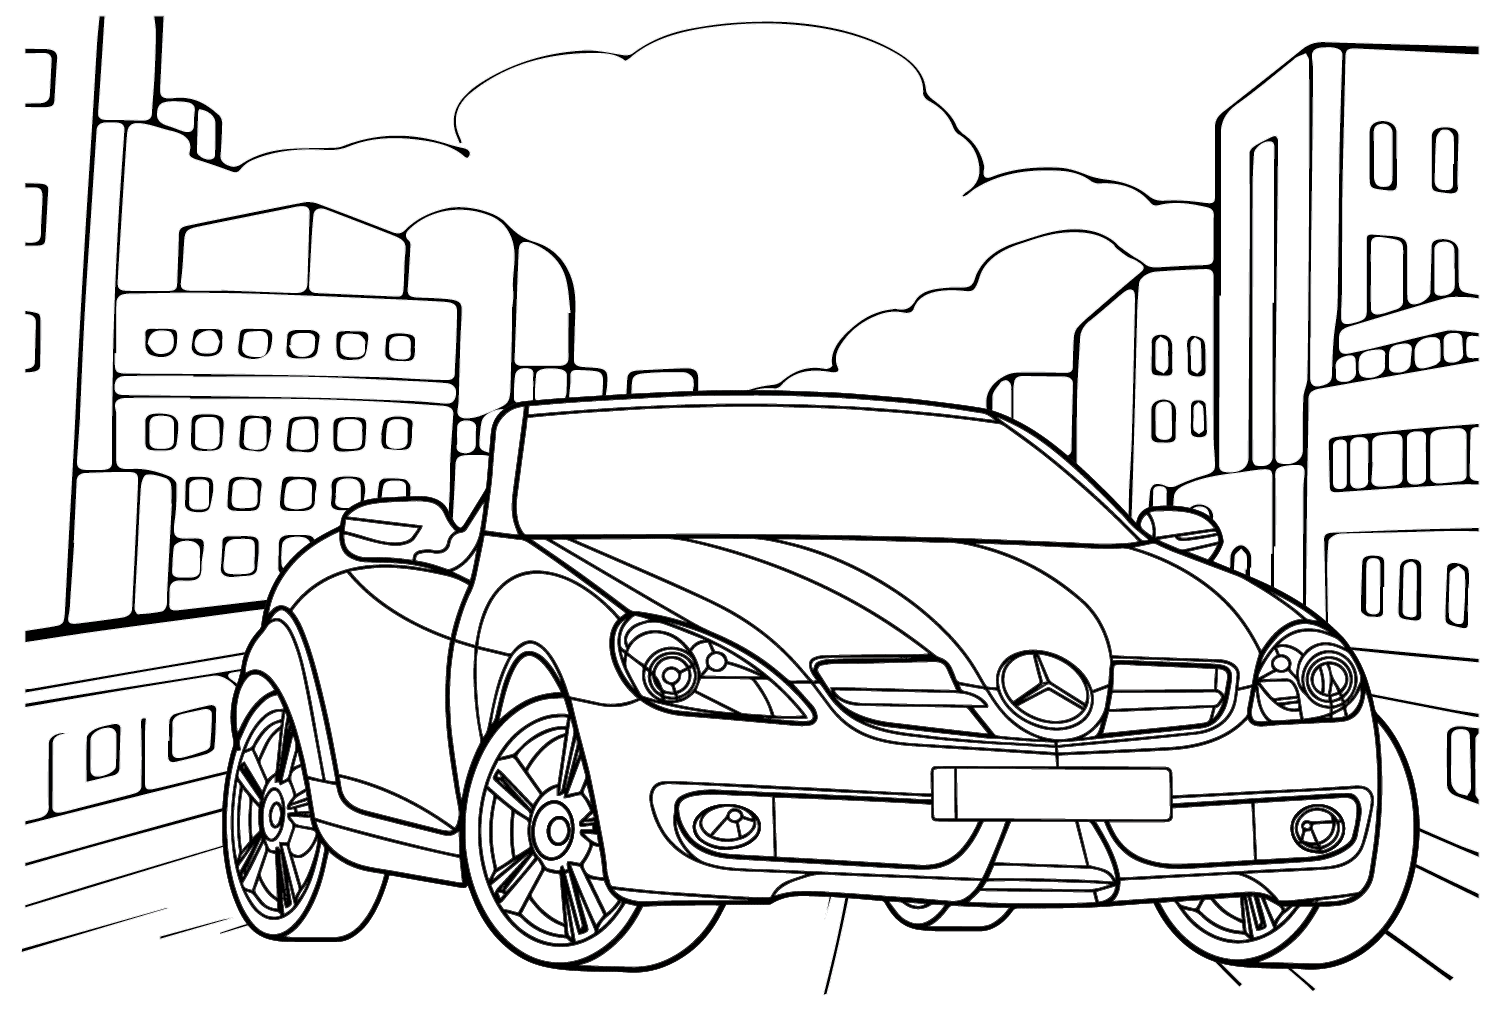 How to Draw a Mercedes-Benz E-Class